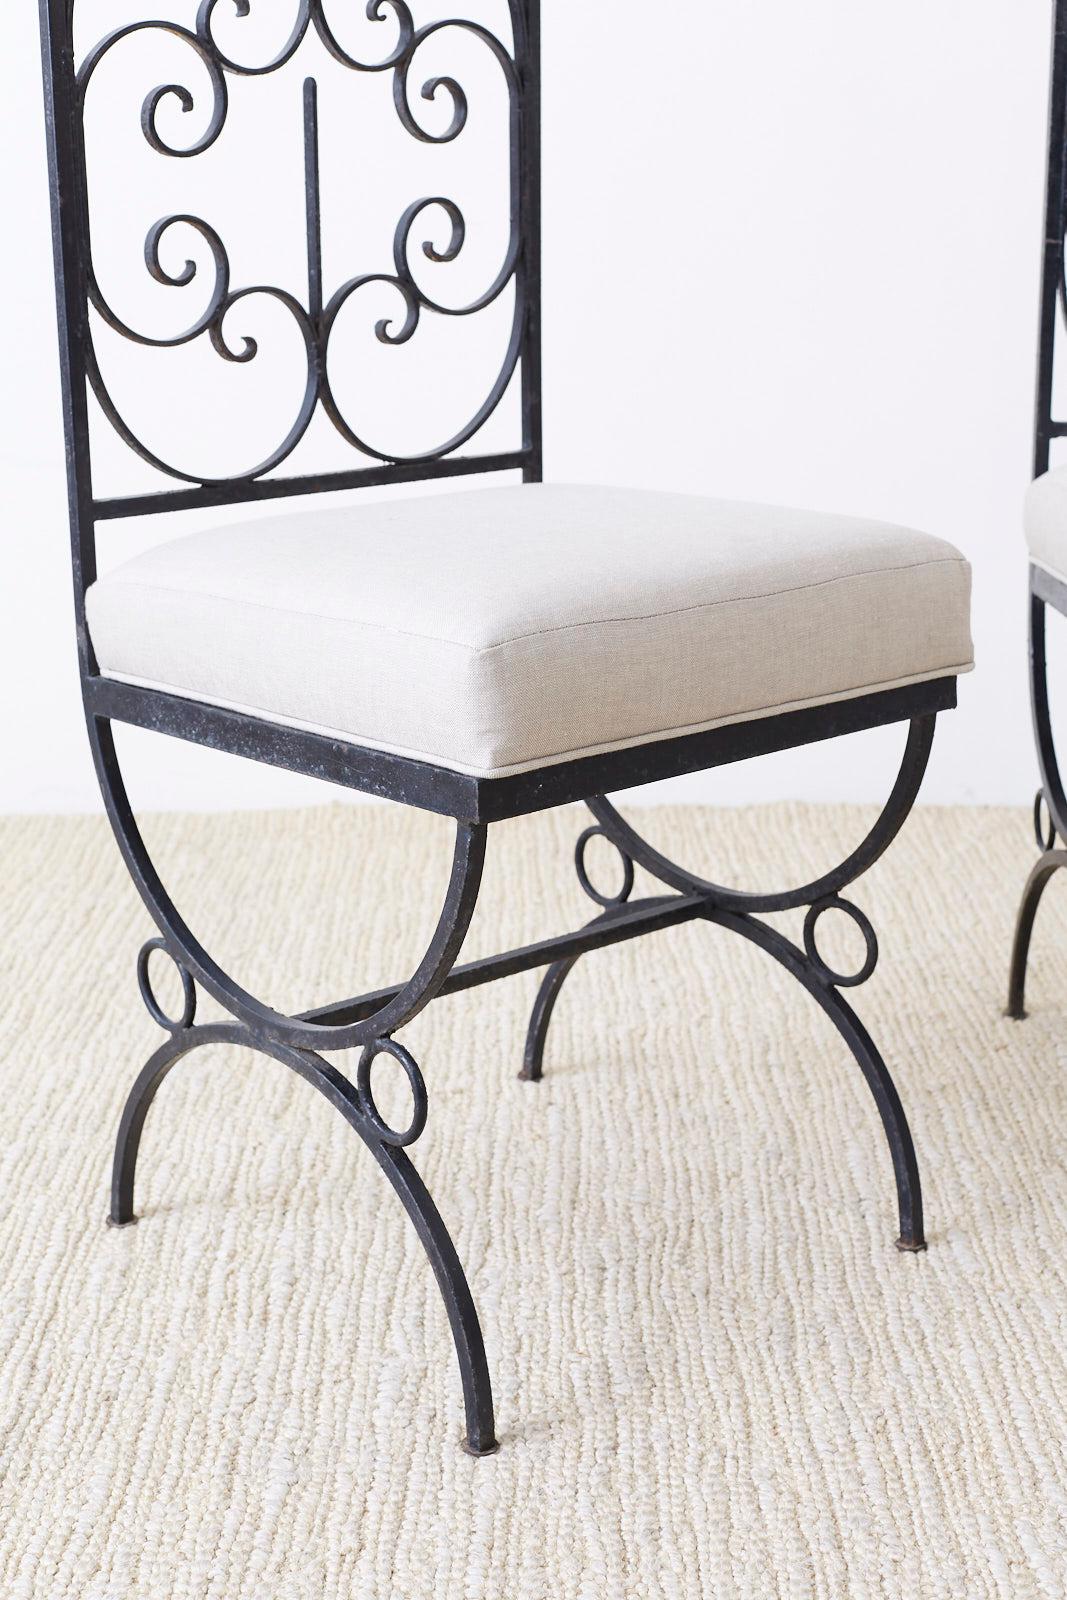 Wrought Iron Arthur Umanoff Style Spanish Revival High Back Chairs